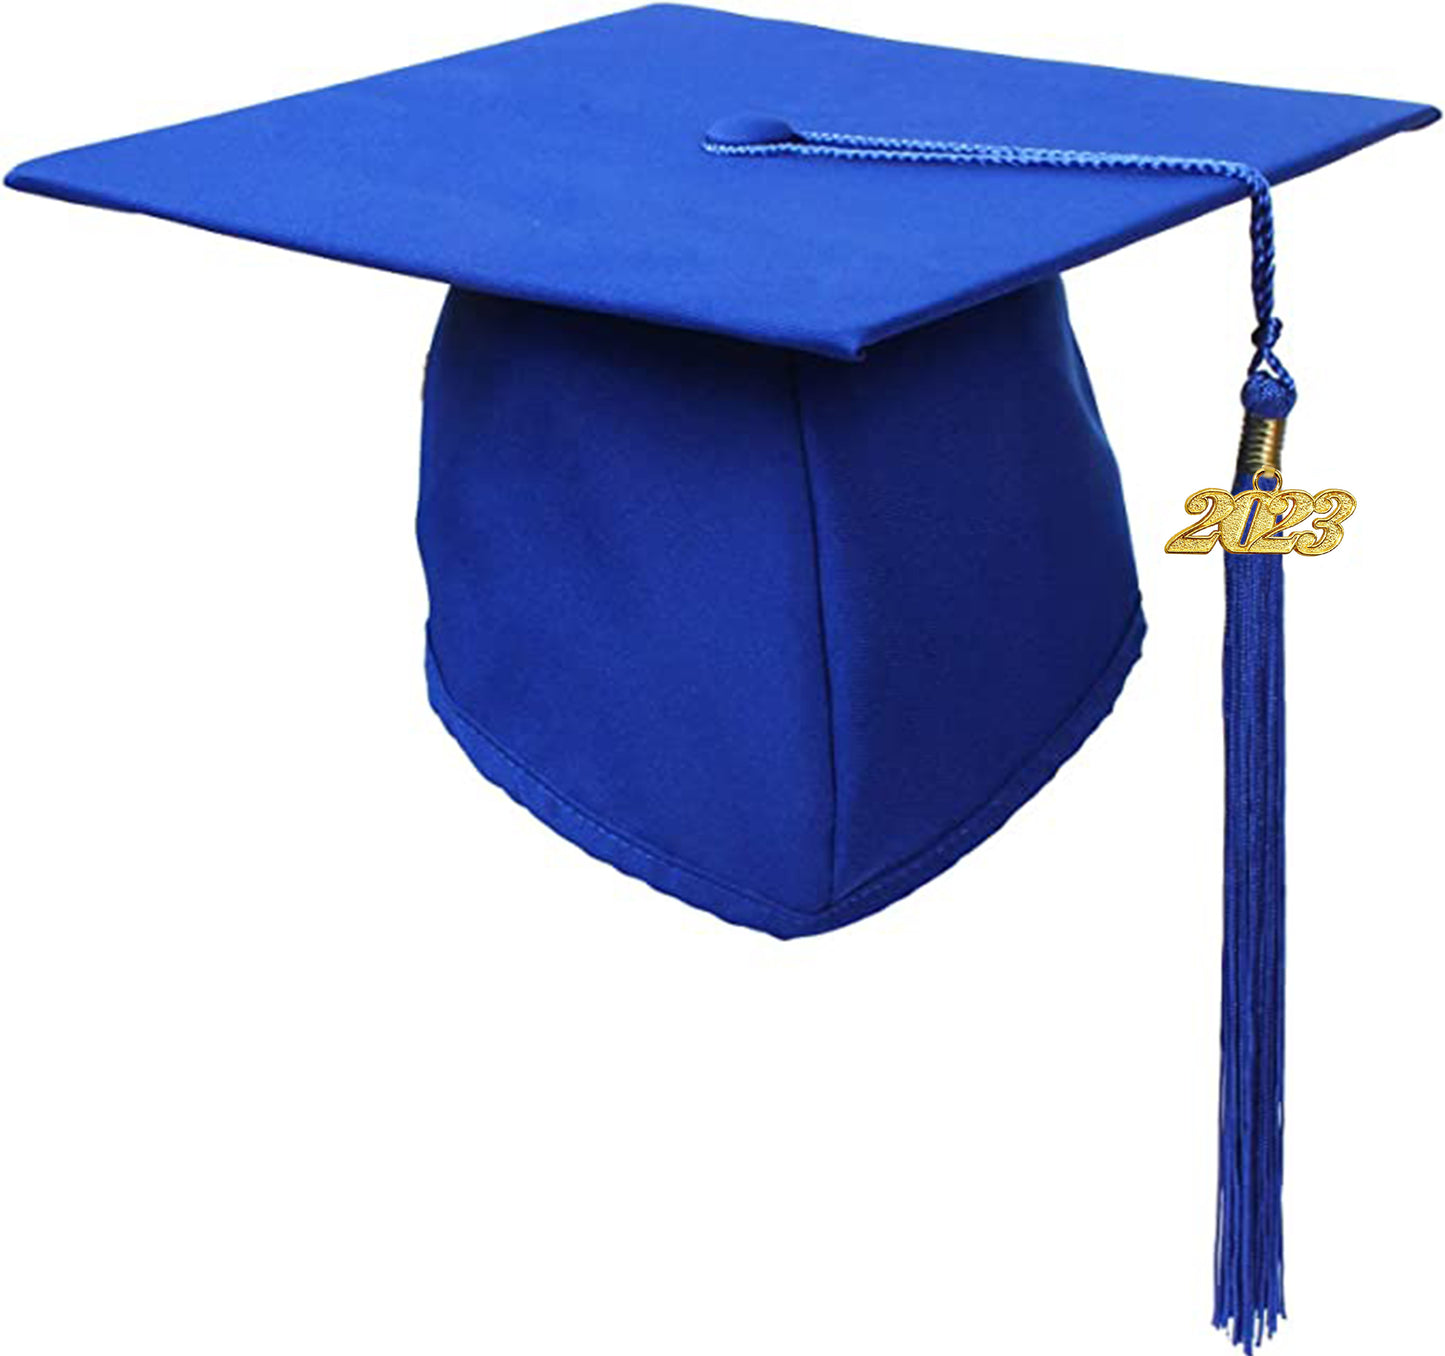 Matte Royal Blue Graduation Cap and Tassel